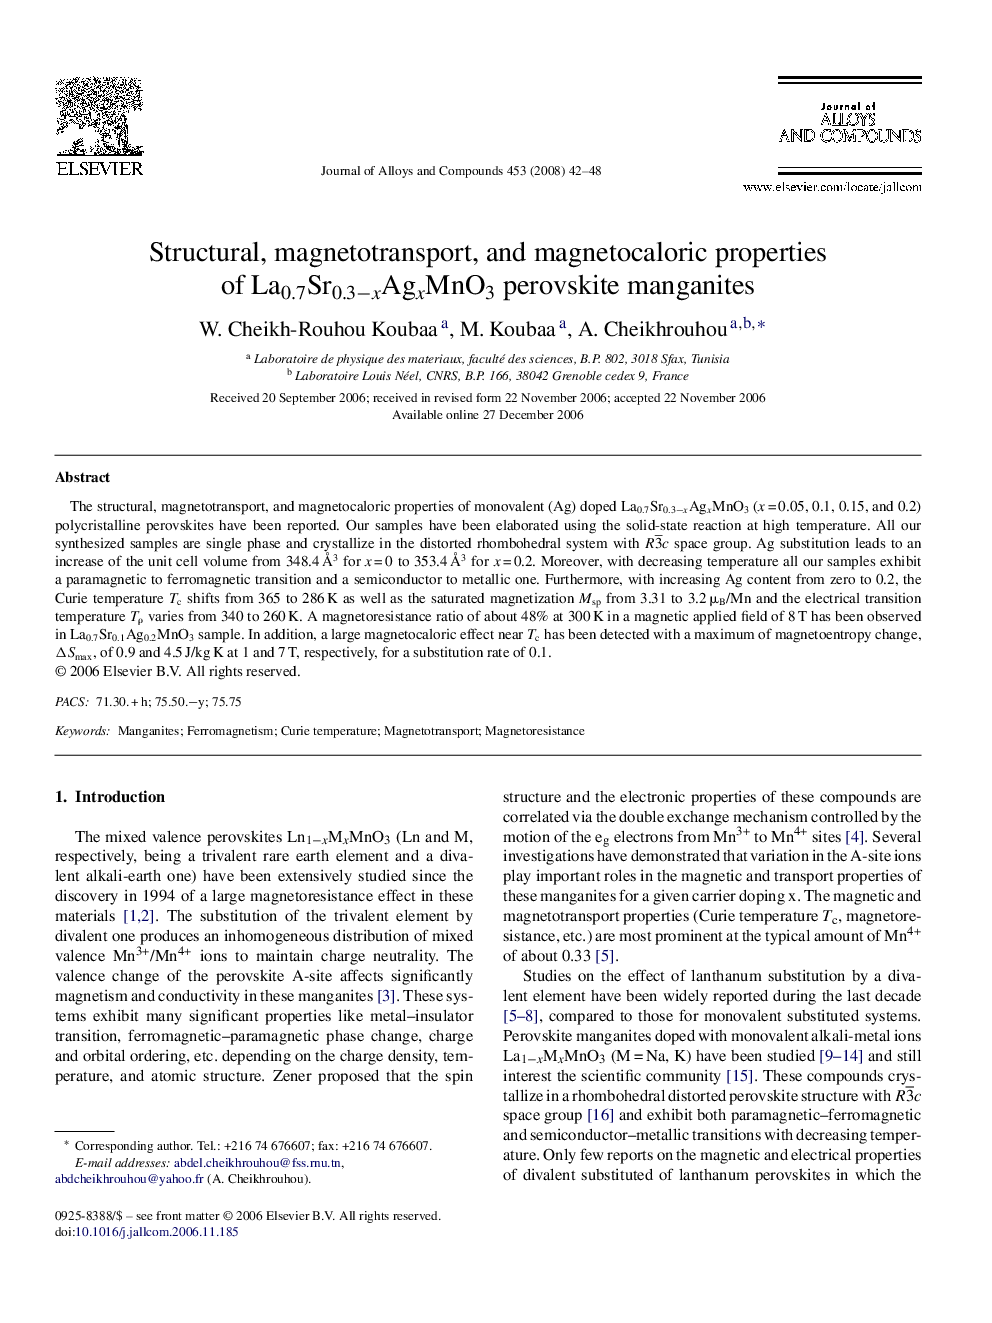 Structural, magnetotransport, and magnetocaloric properties of La0.7Sr0.3−xAgxMnO3 perovskite manganites